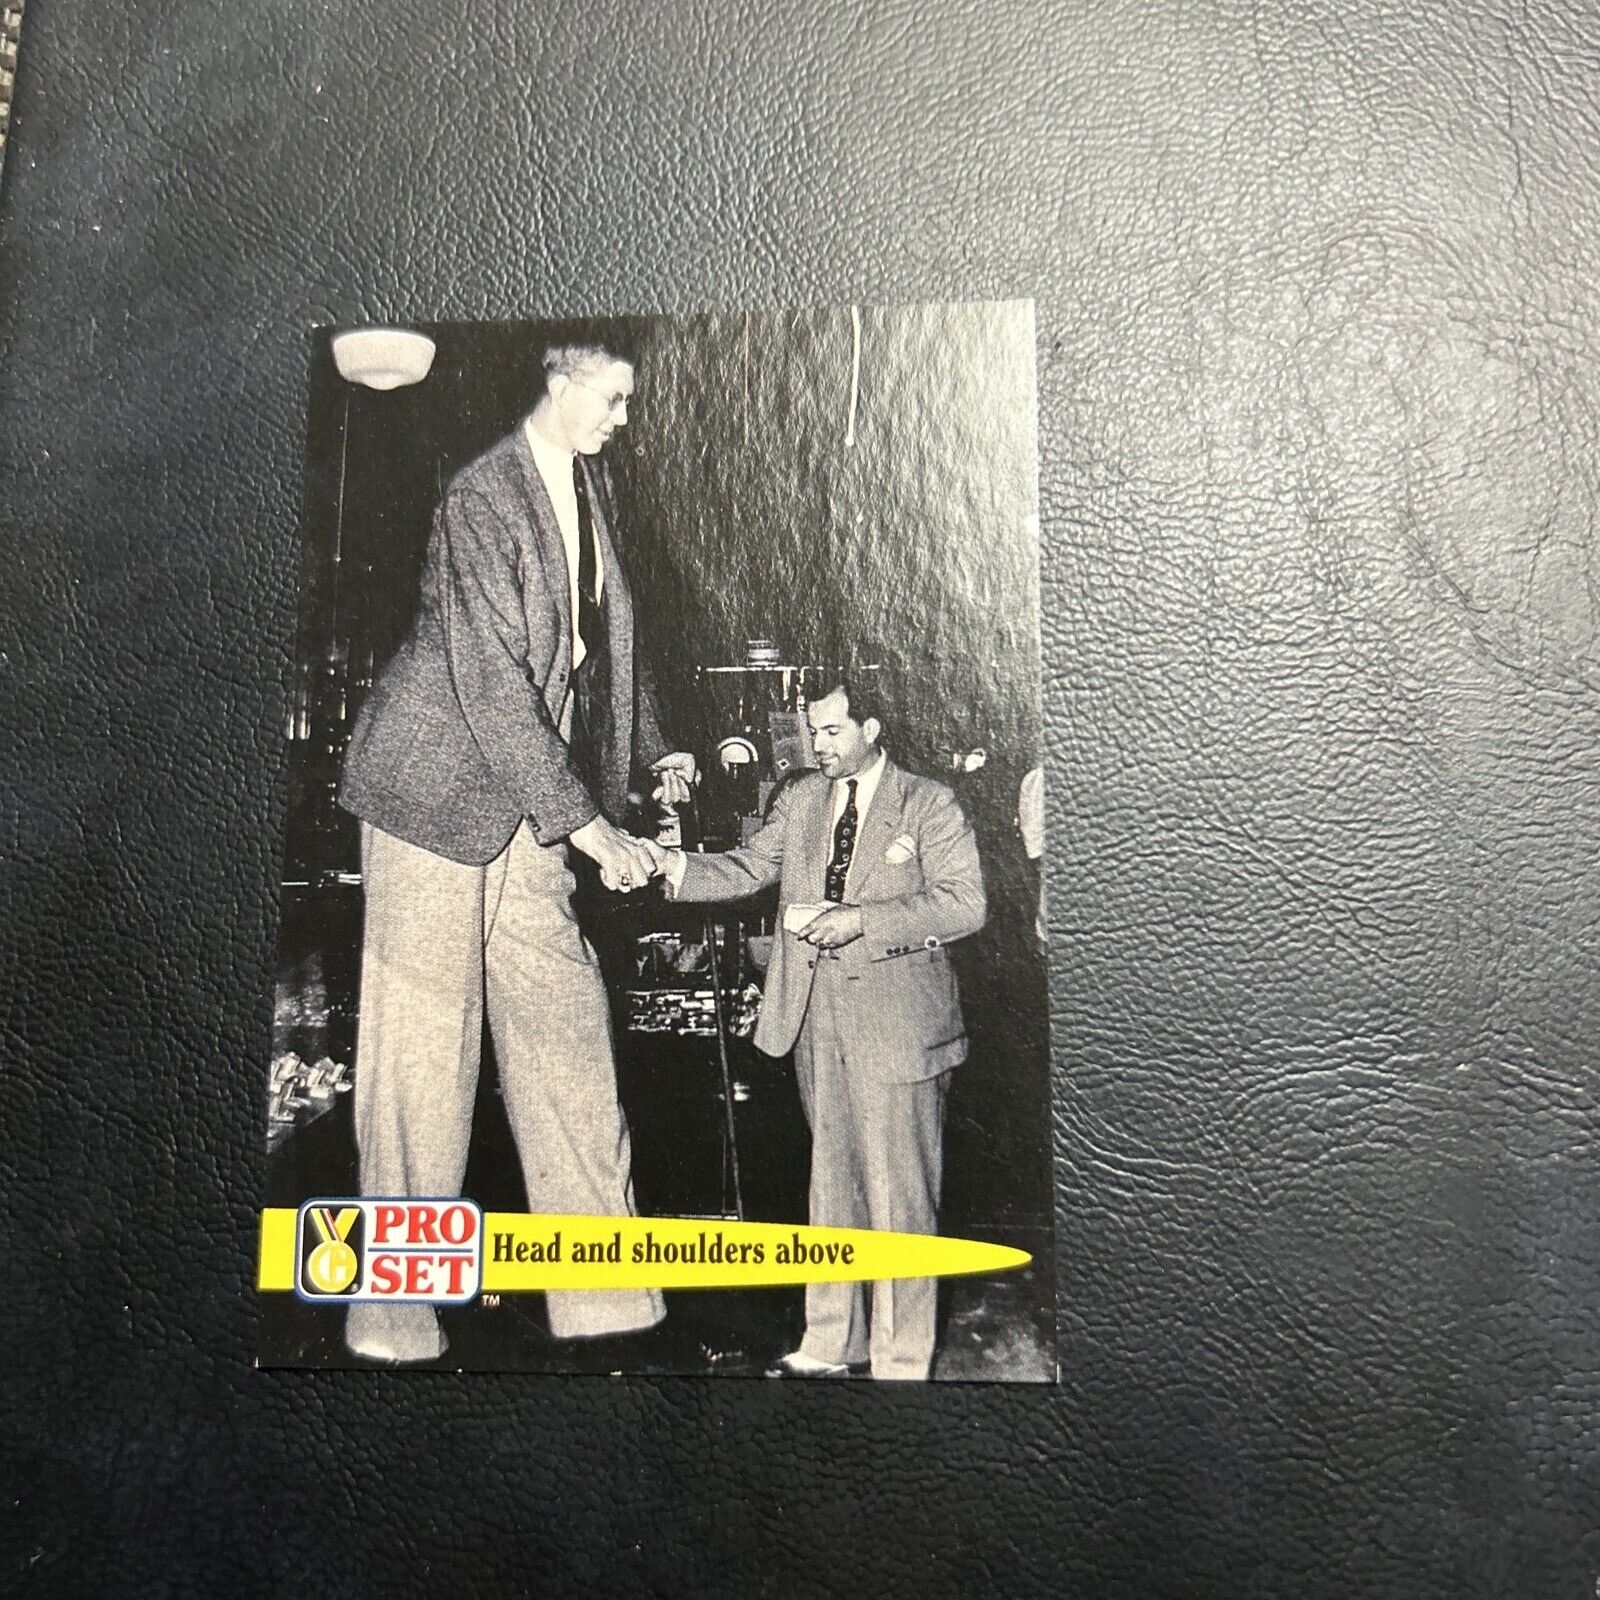 Jb16 Guinness Book Of Records 1992 #7 Tallest Man Robert Pershing Wadlow